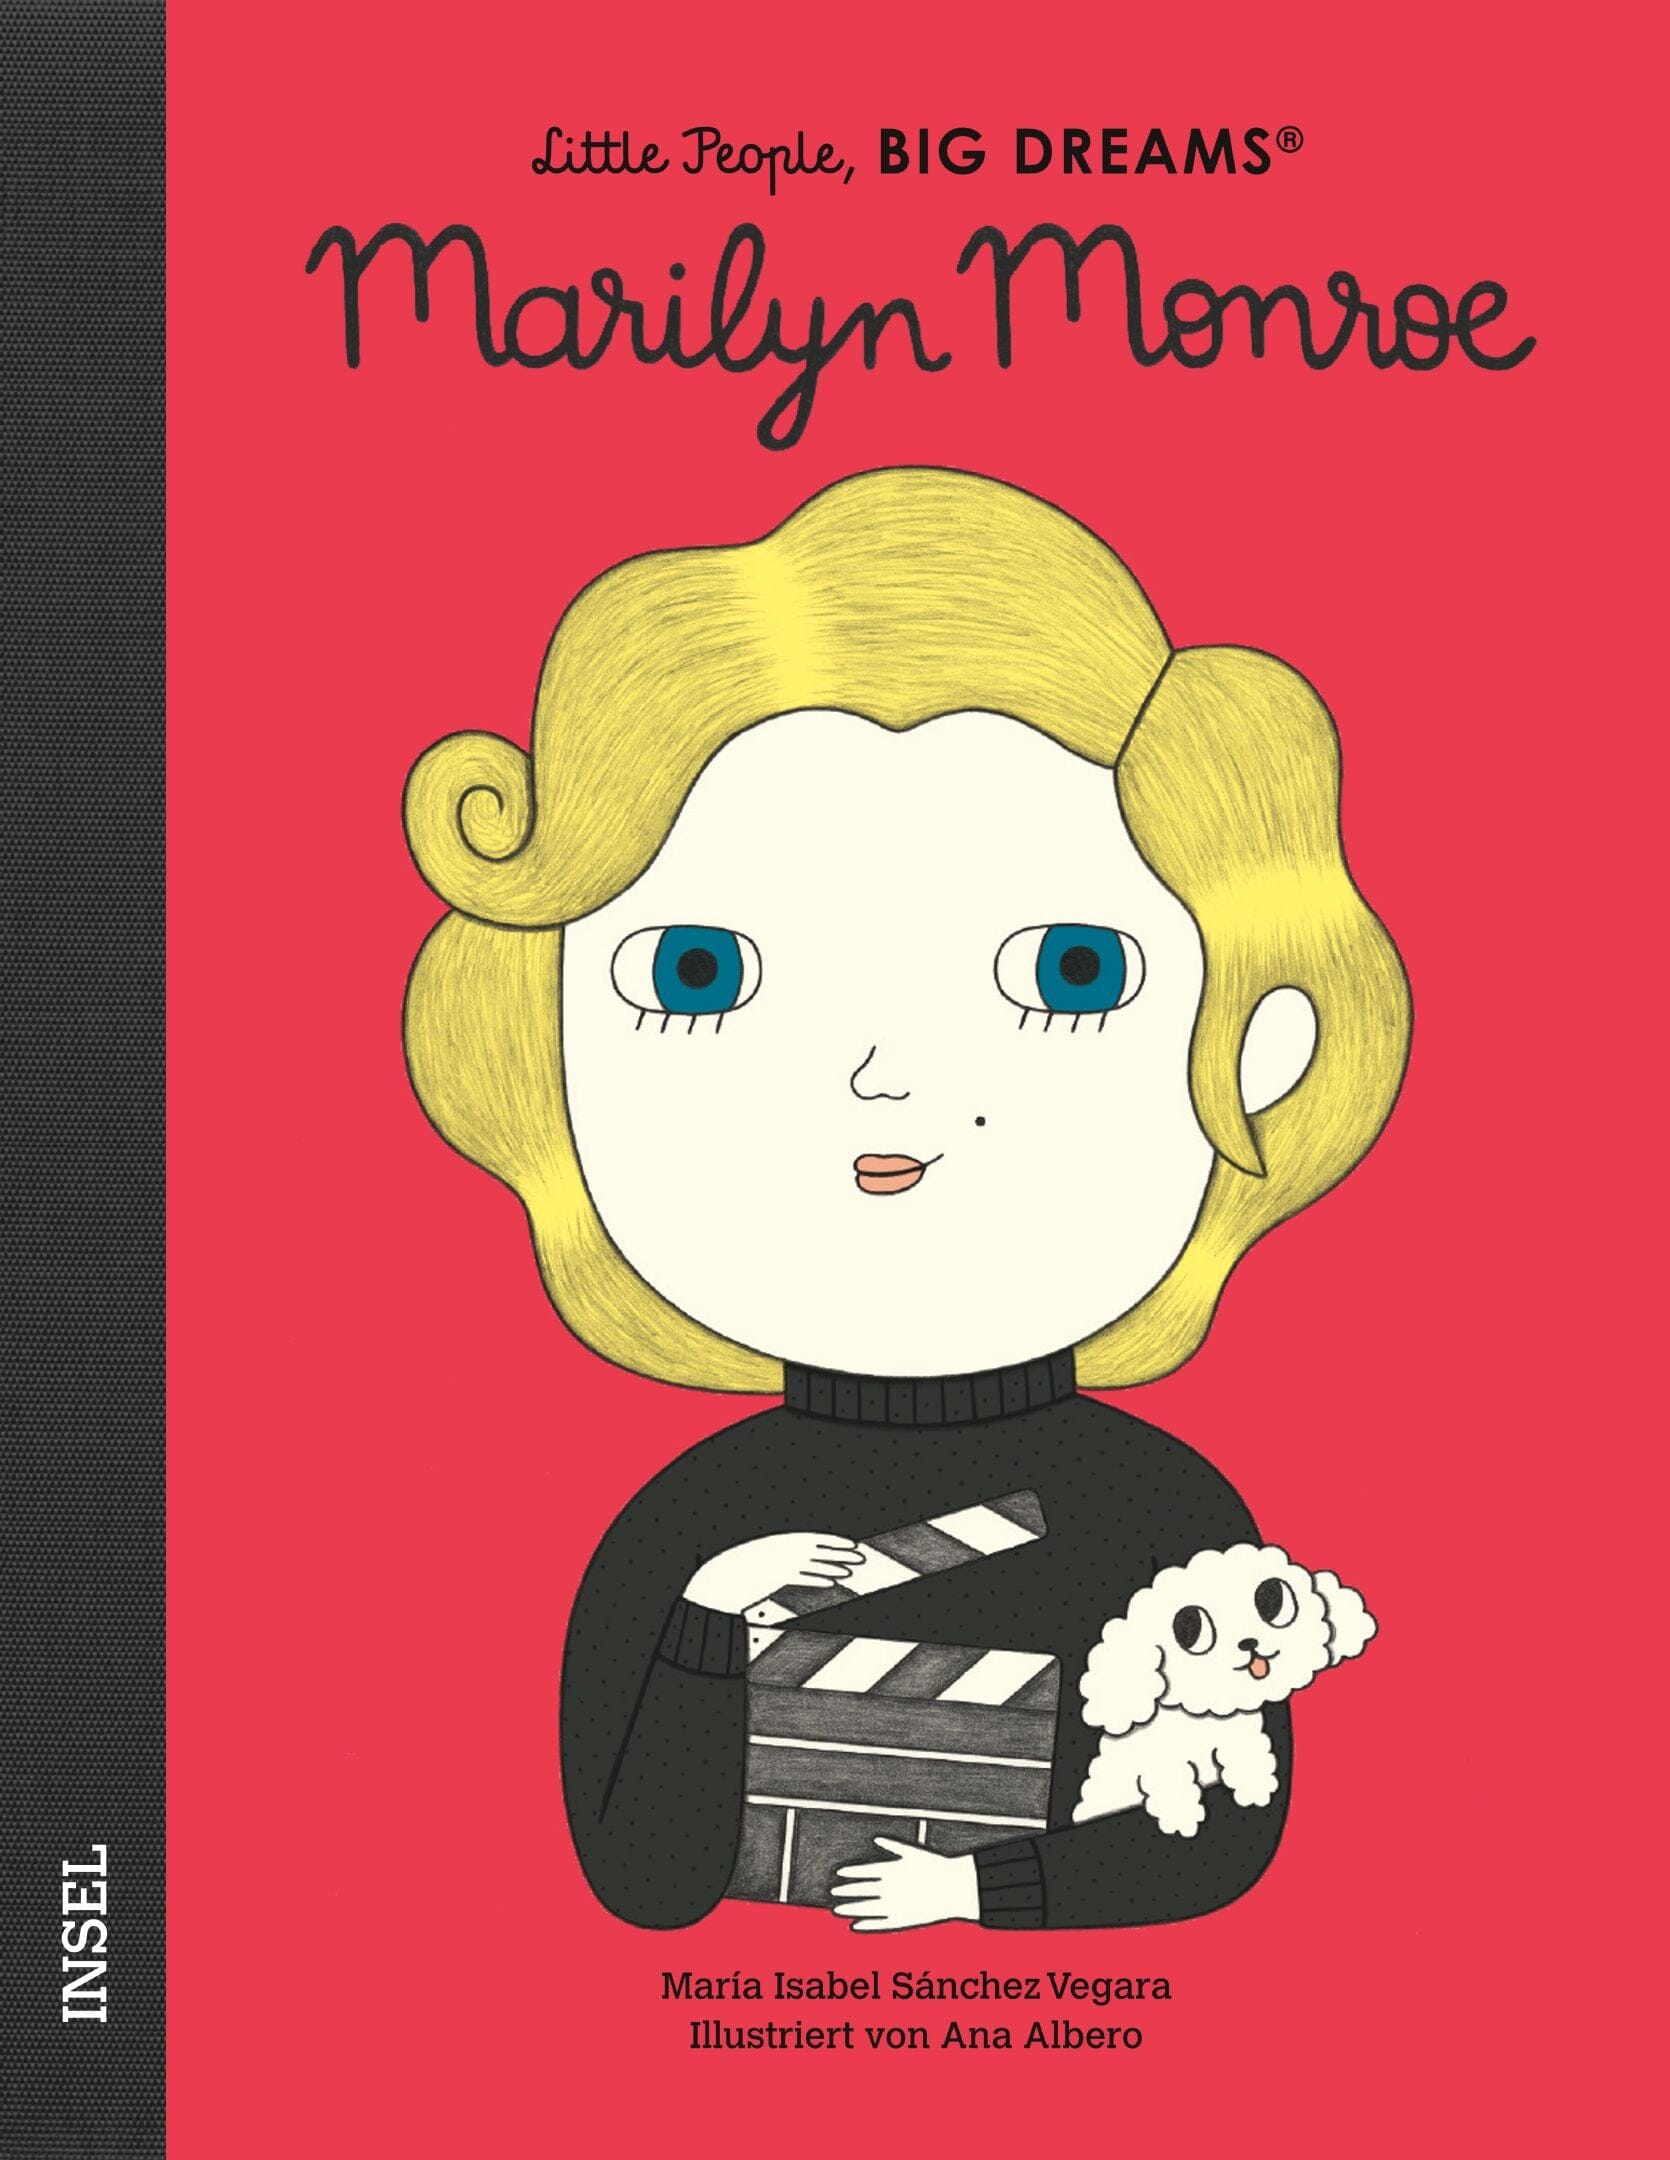 Little People, Big Dreams "Marilyn Monroe" Buch Insel Verlag 